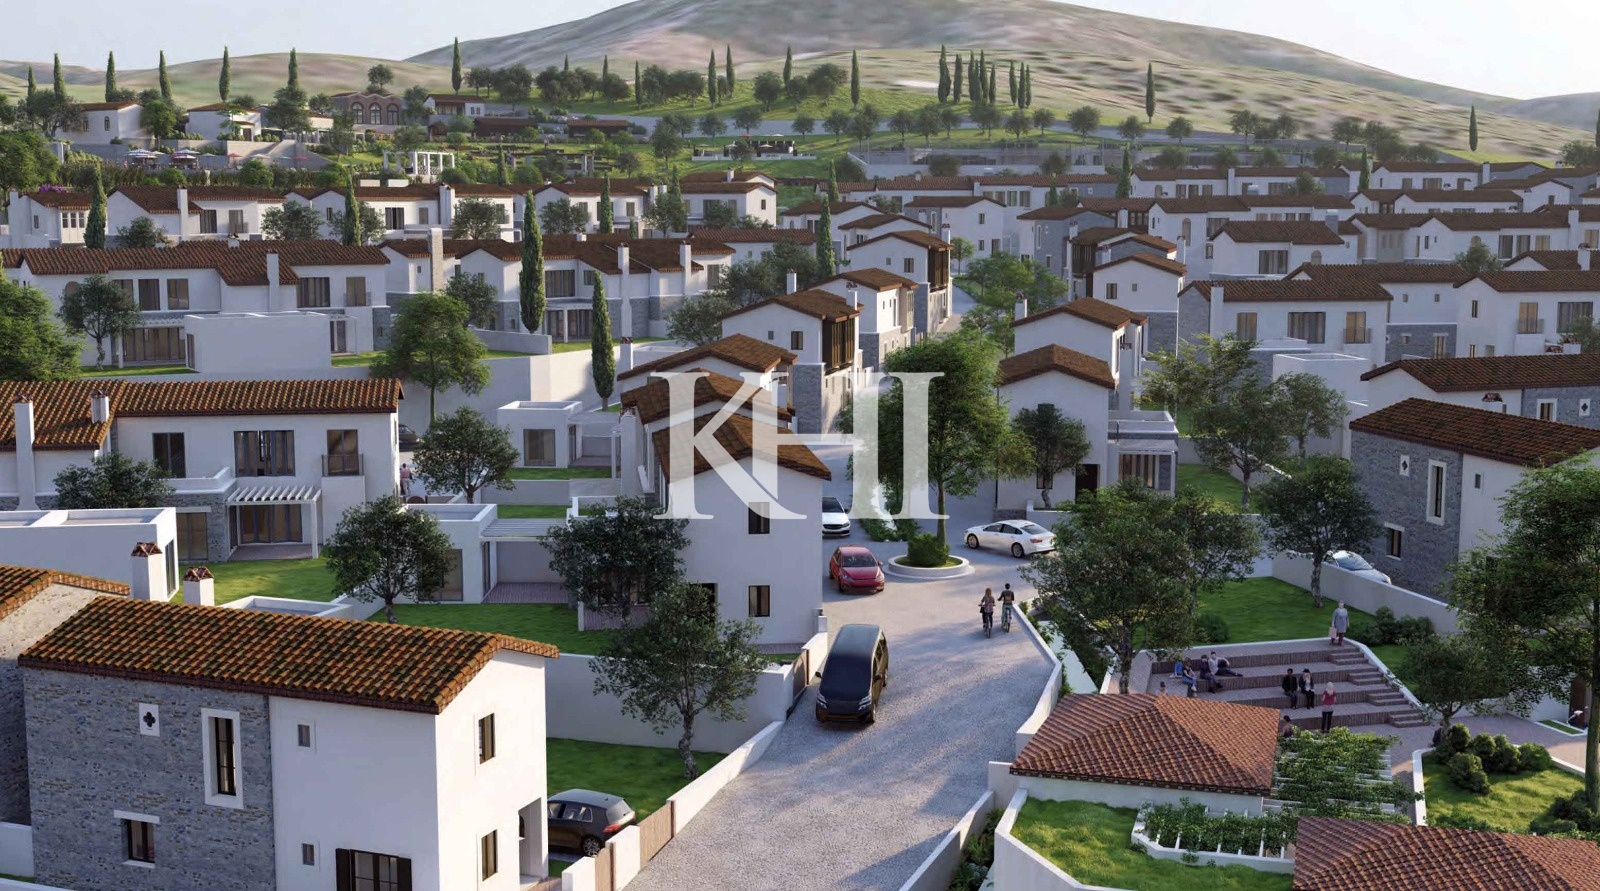 New Villa Project in Bodrum Slide Image 20